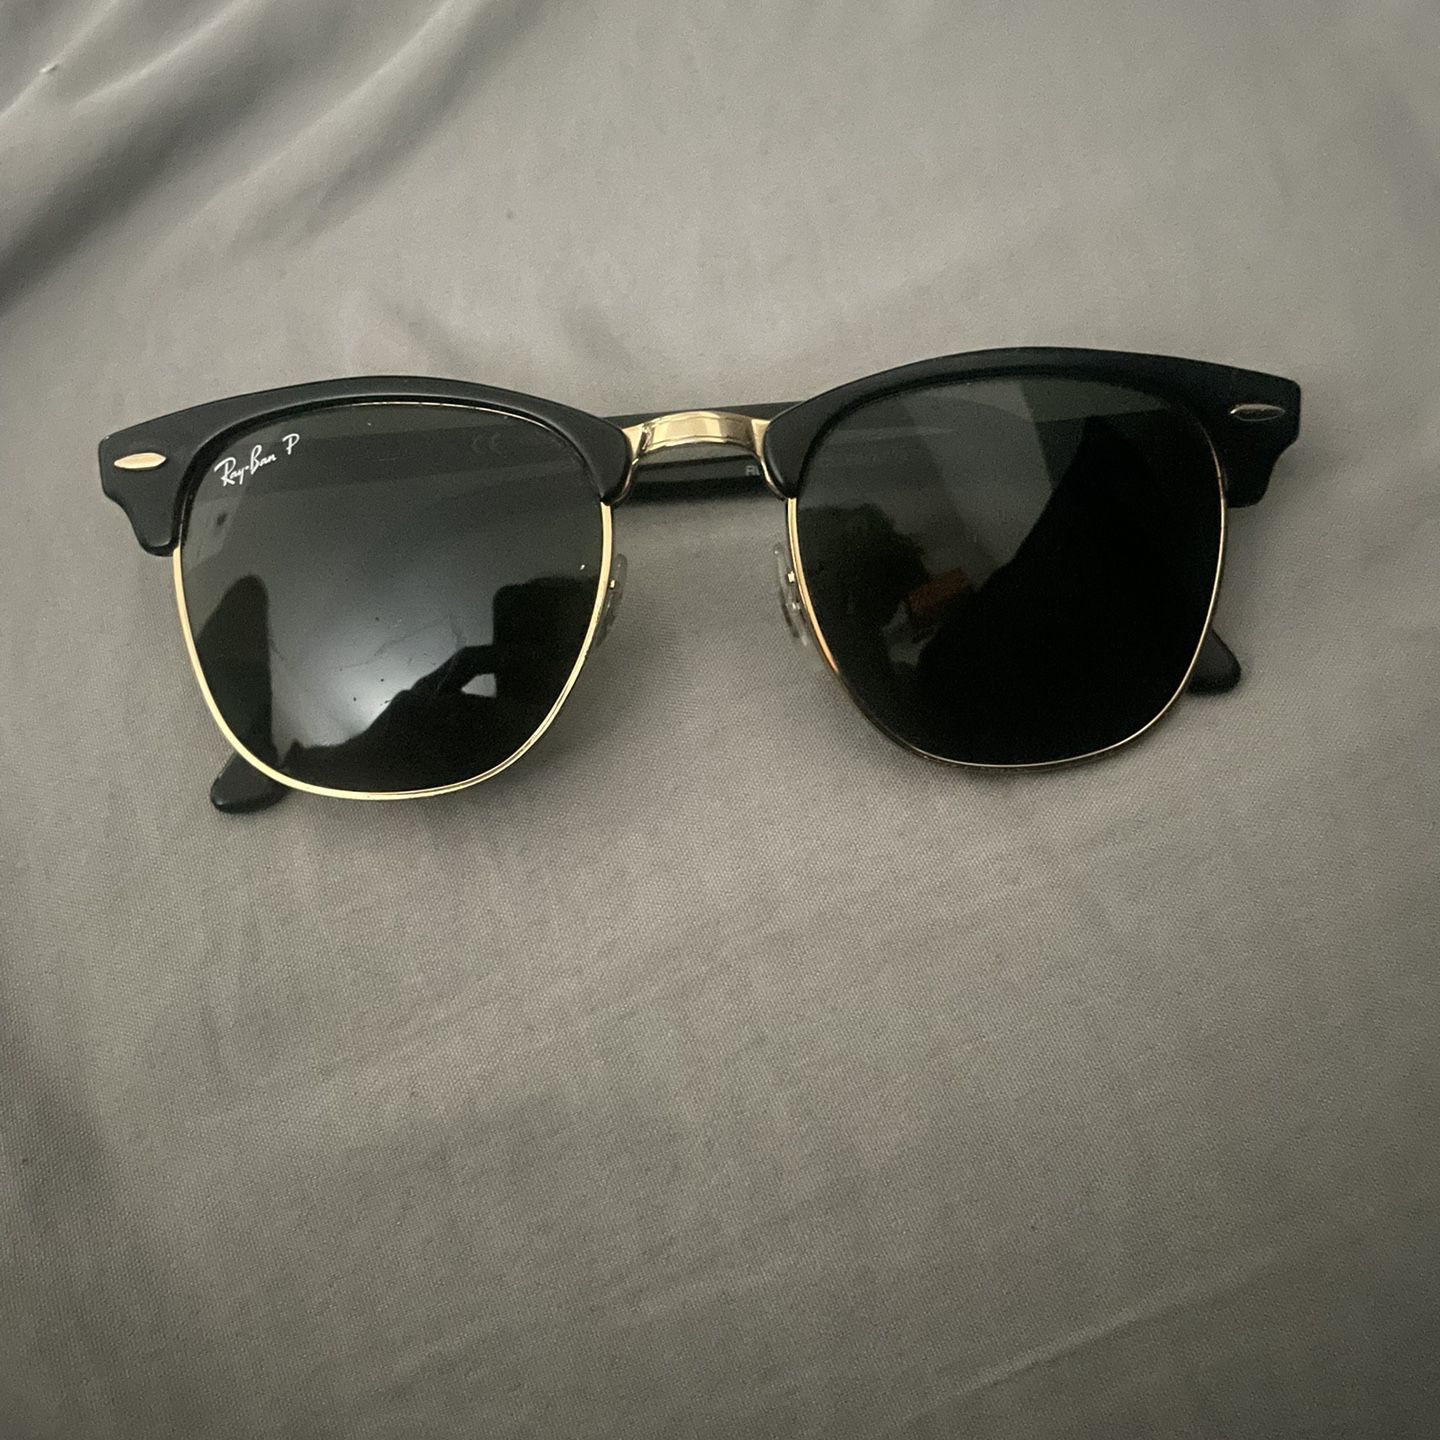 Chanel Sunglasses (5225Q) - Original for Sale in San Diego, CA - OfferUp